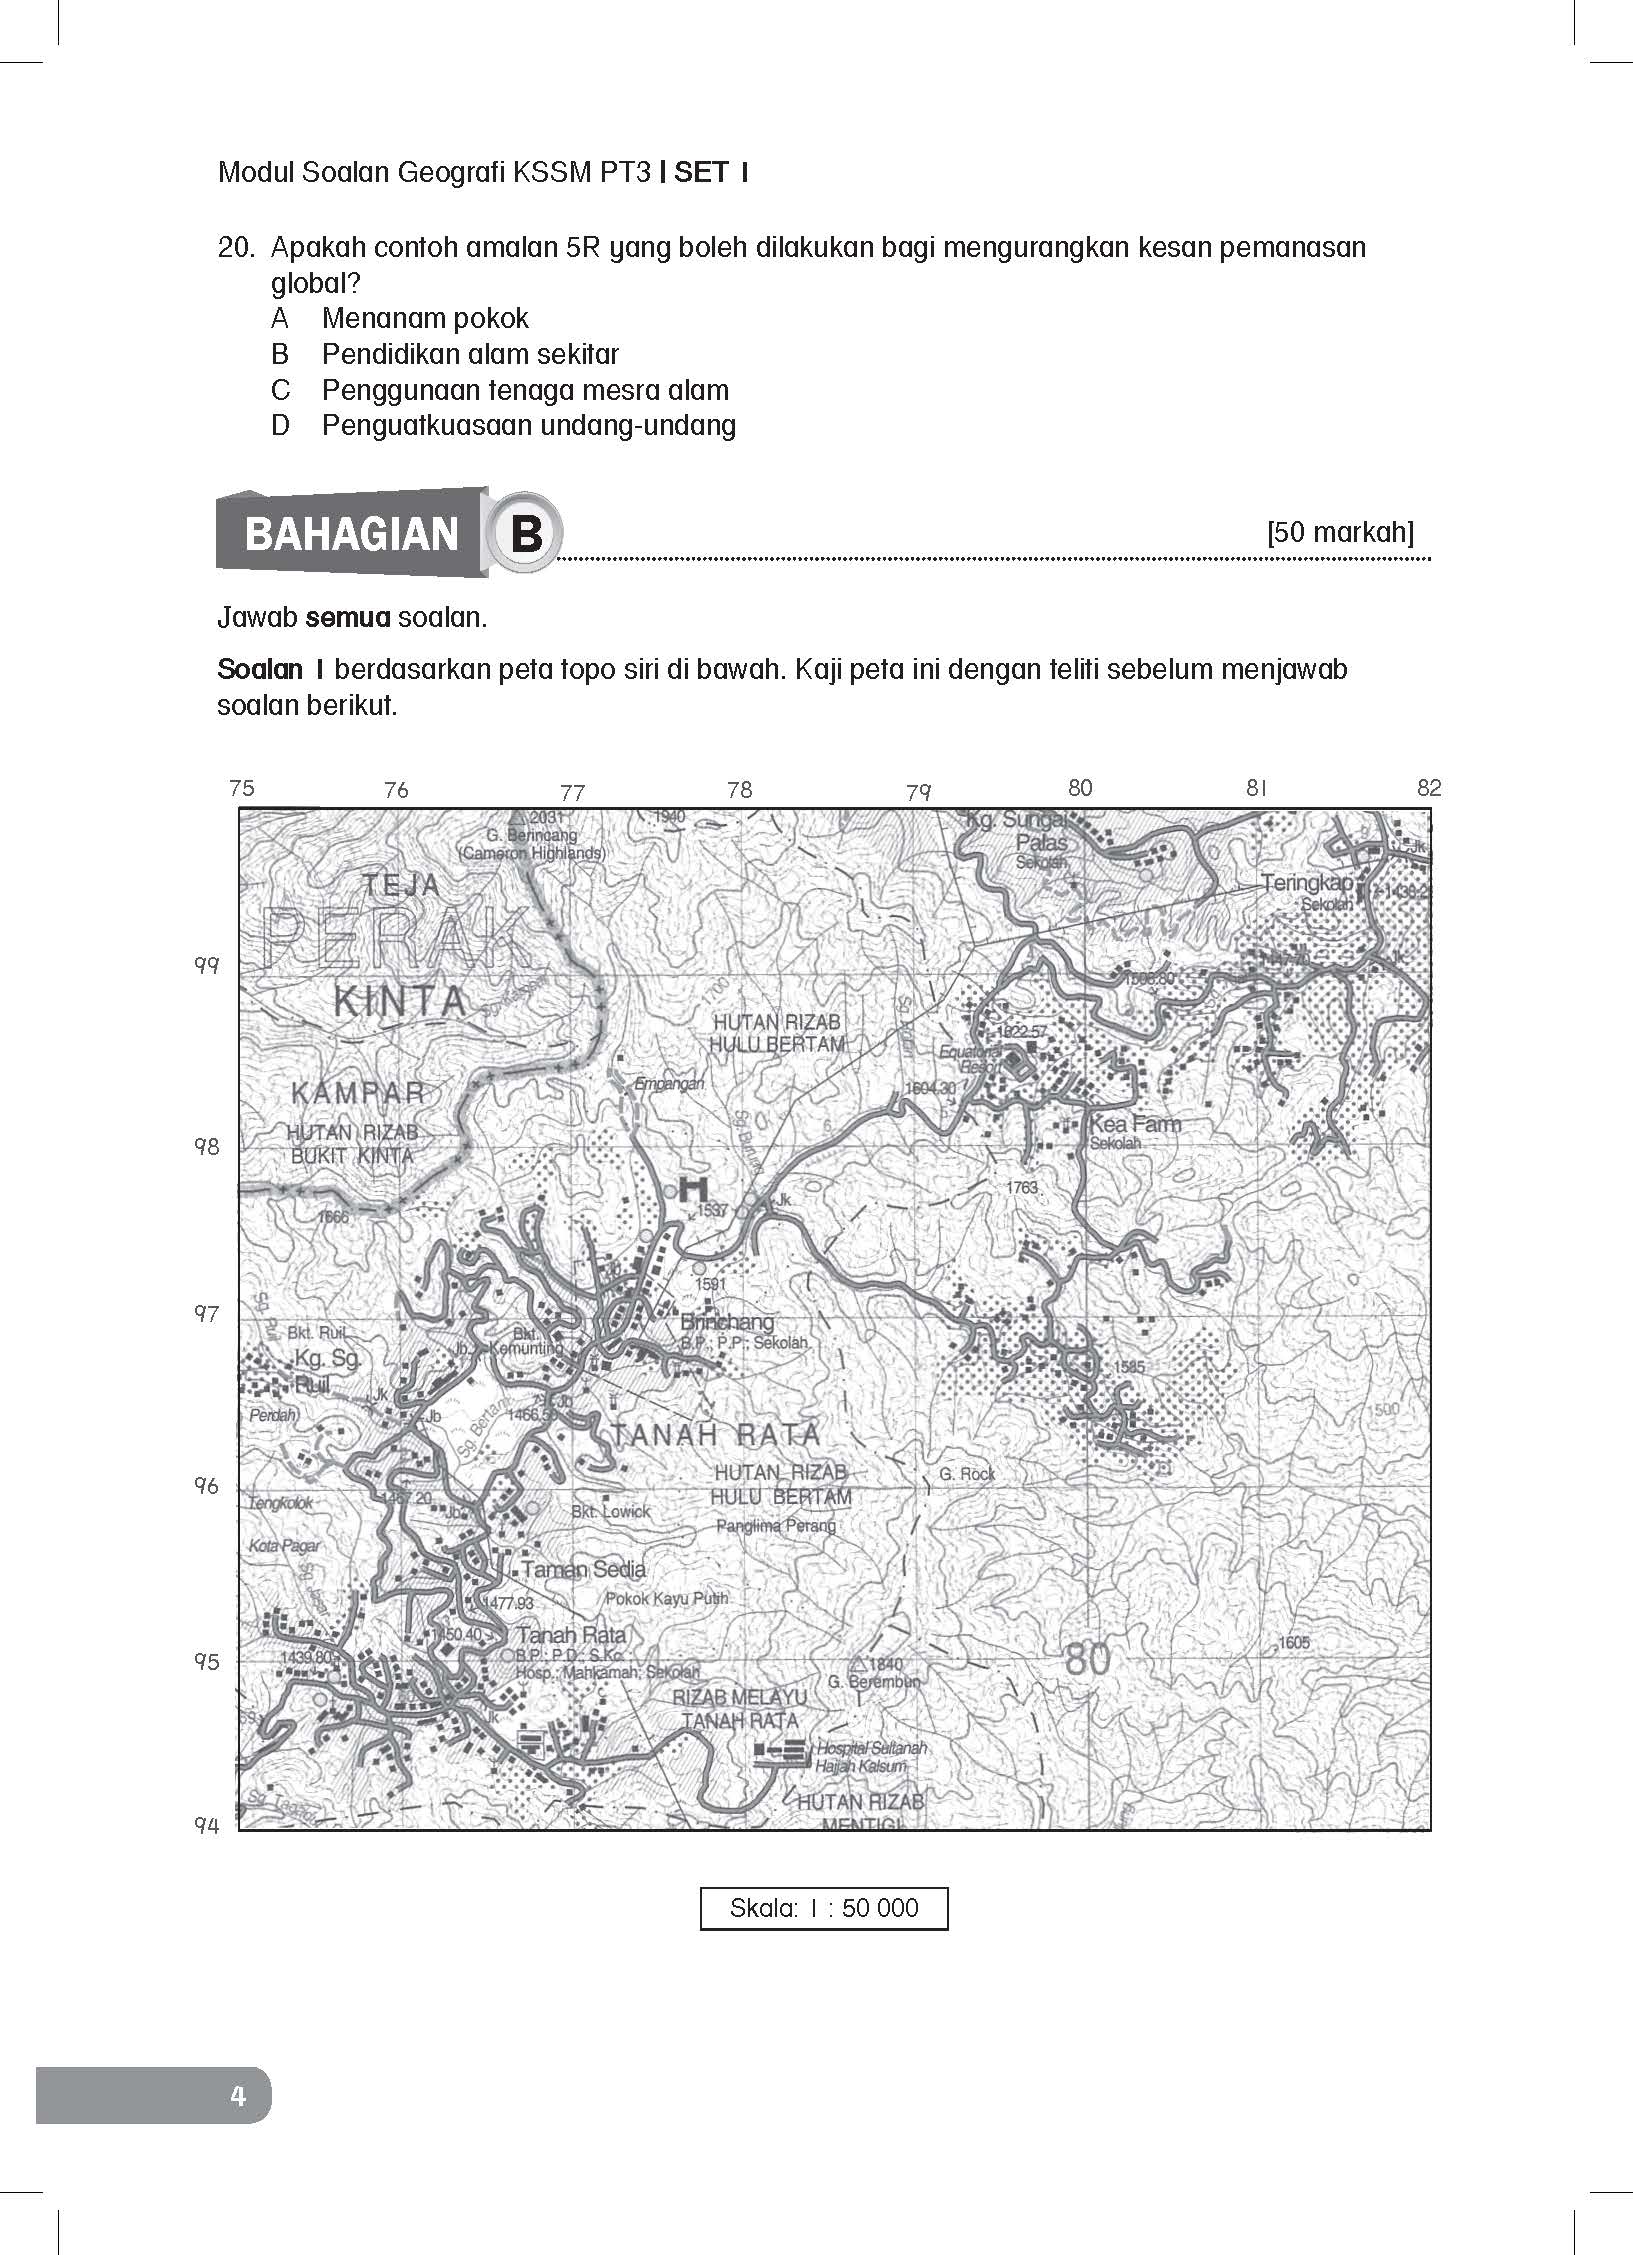 Get Smart Modul Soalan Geografi KSSM PT3  (Siri 1) - (TBBS1170)